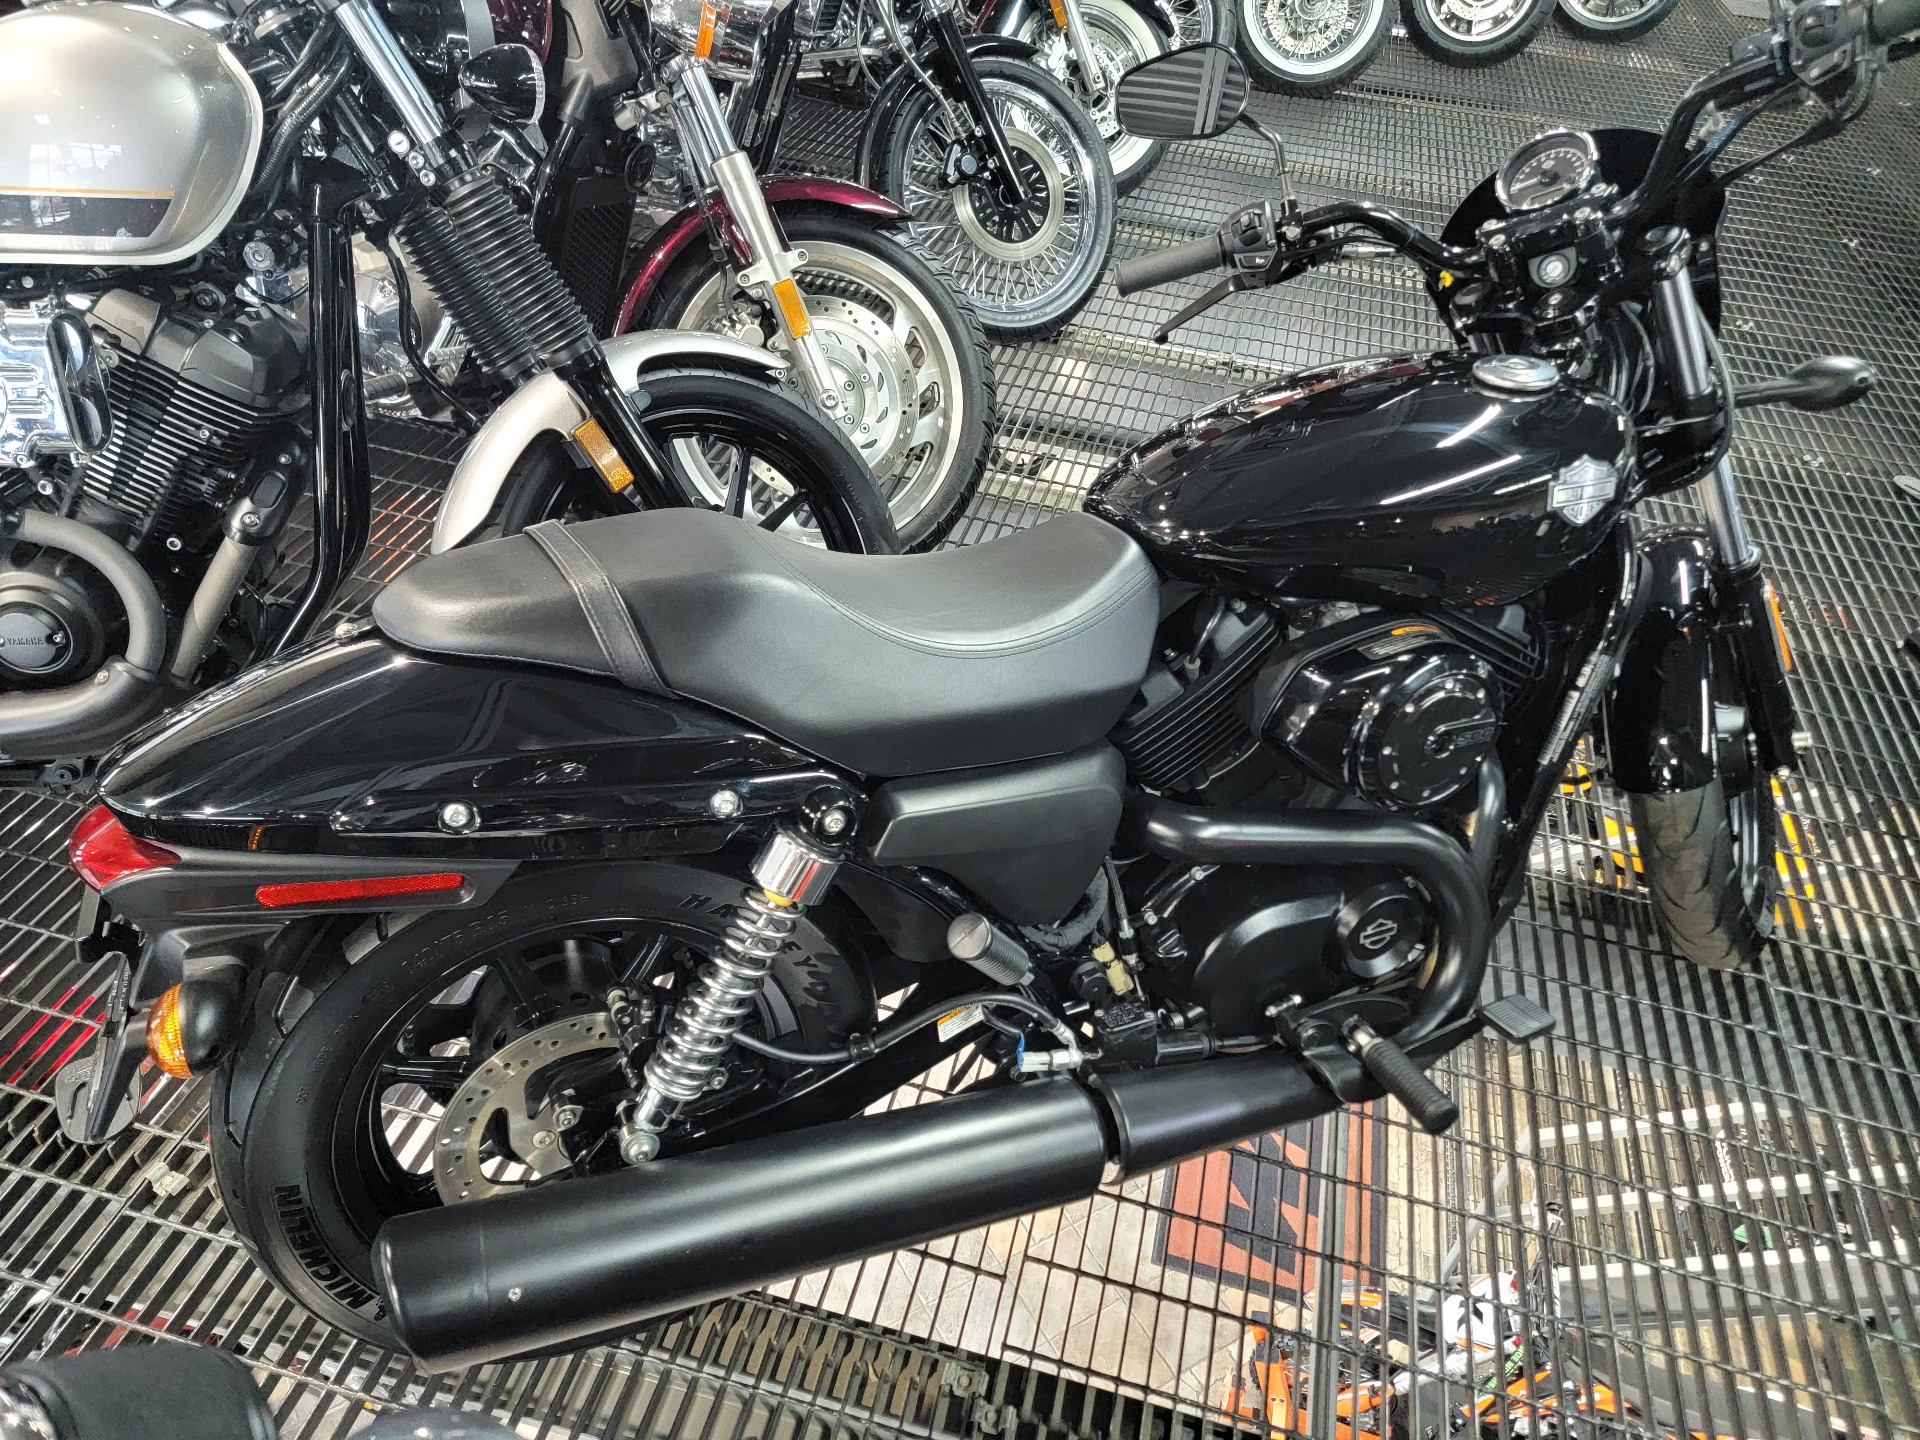 2015 Harley-Davidson Street™ 500 in Monroe, Michigan - Photo 3